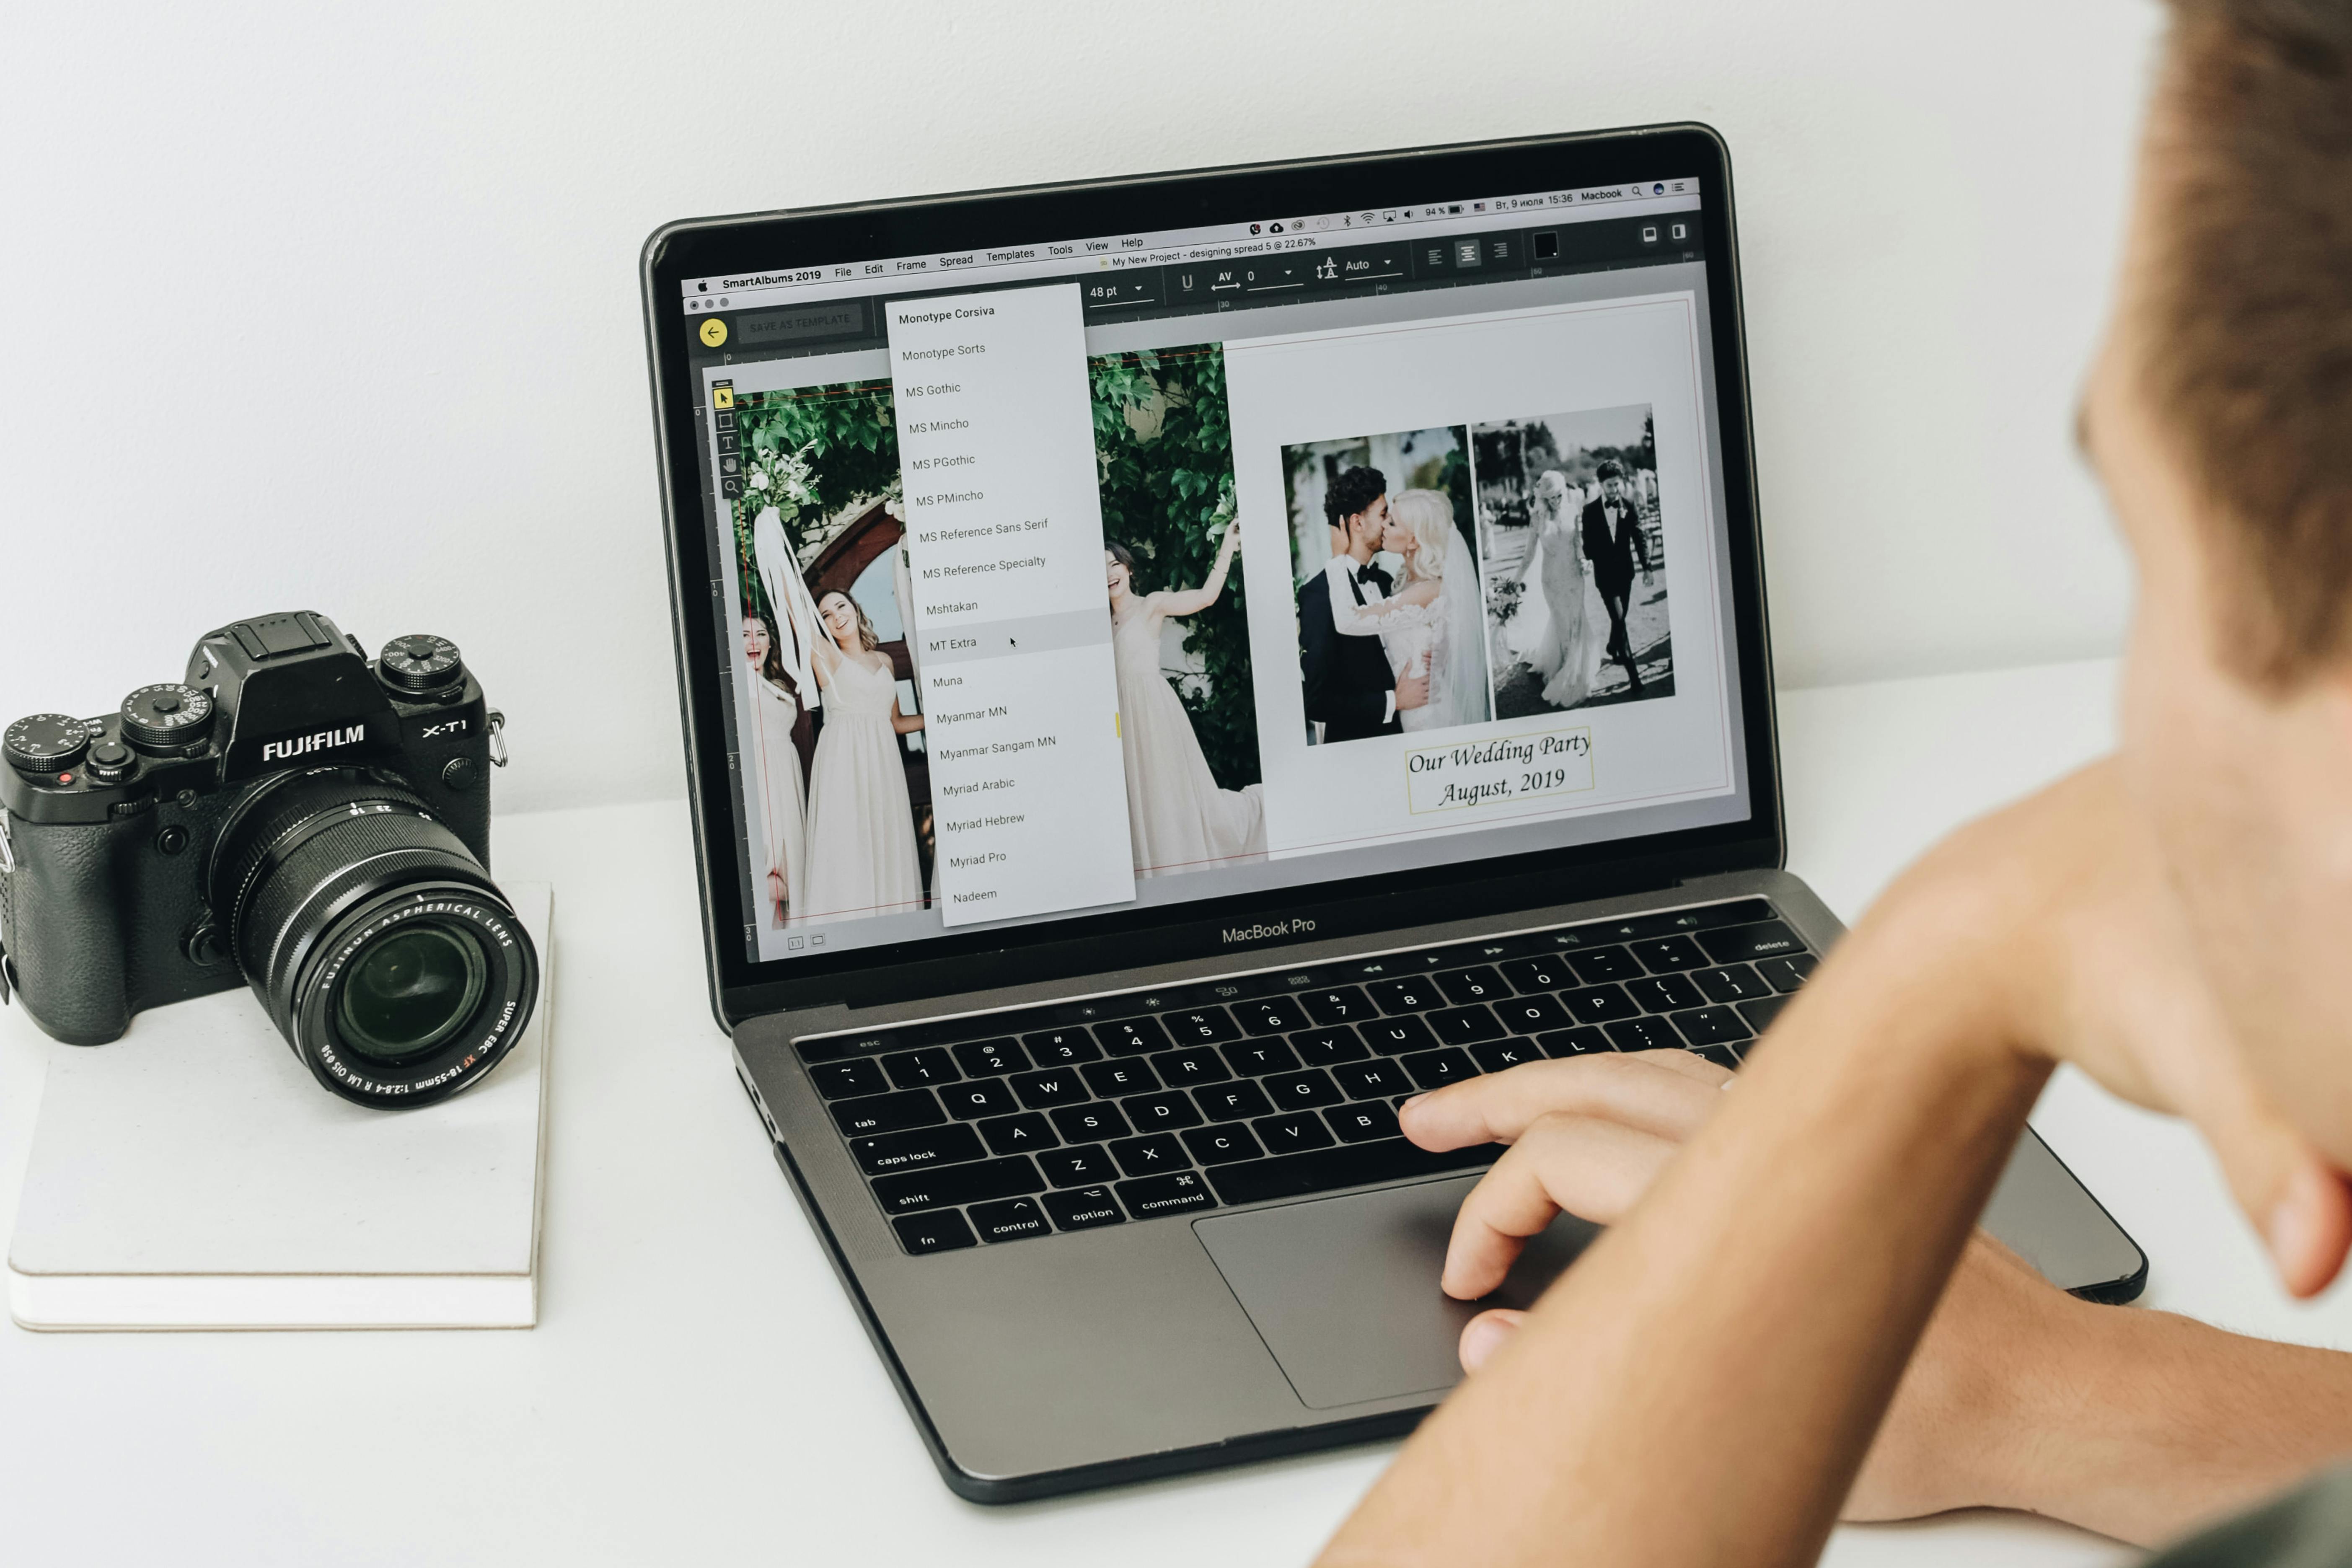 Wedding photographer using SmartAlbums 2019 to design photo album for clients